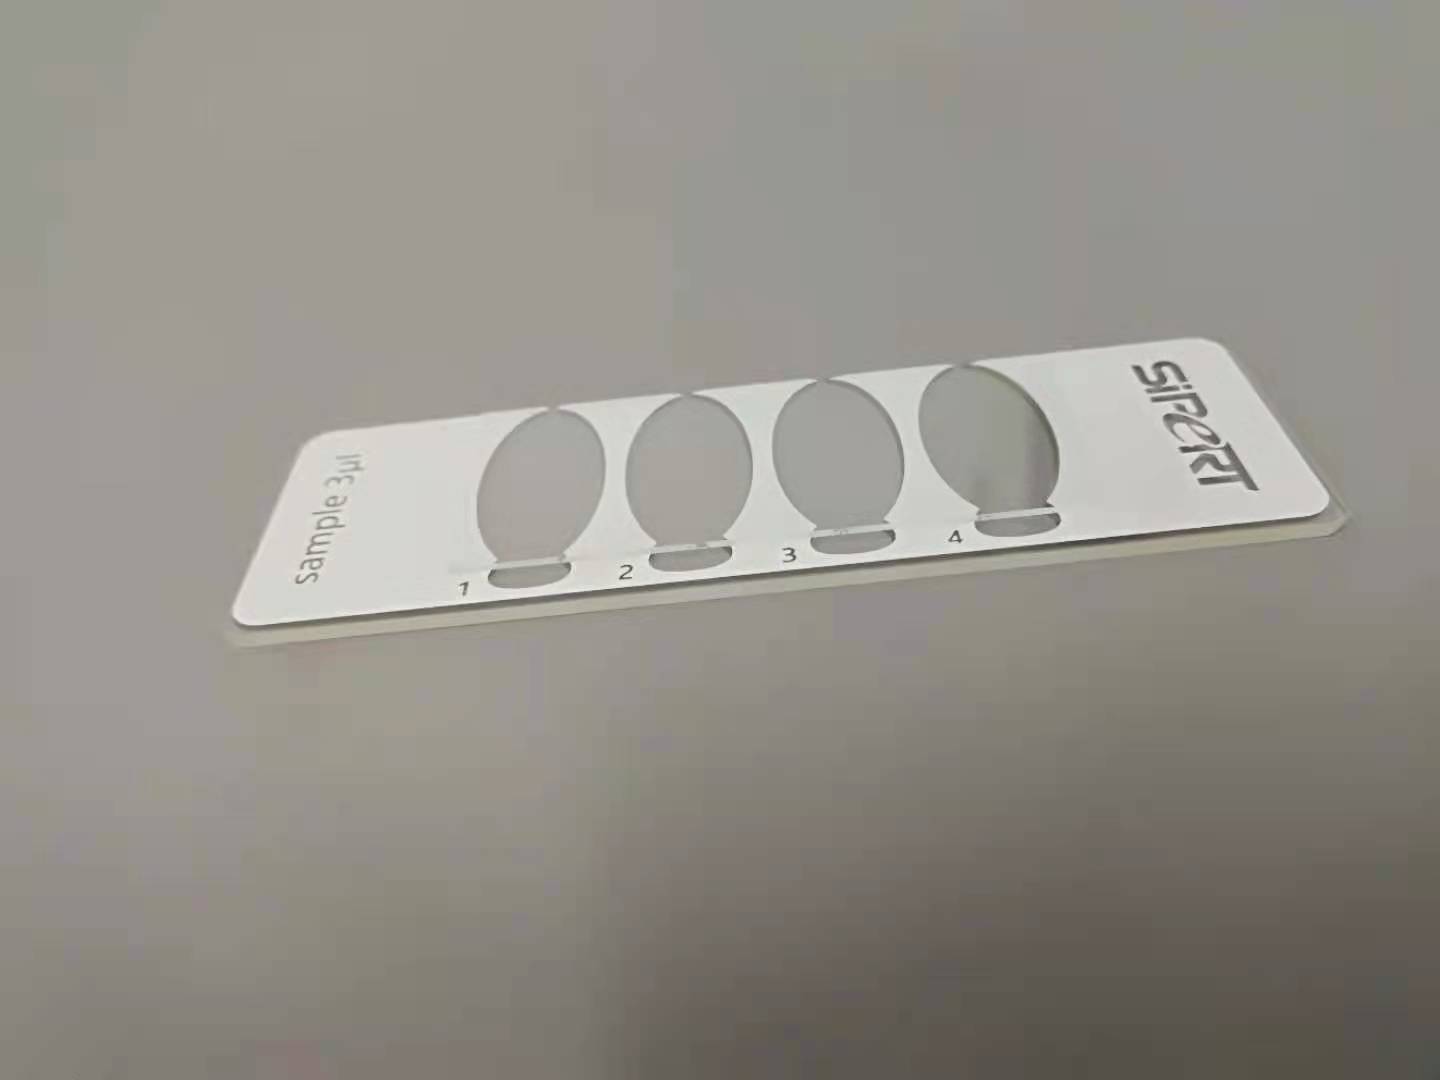 Disposable four-cavity slide